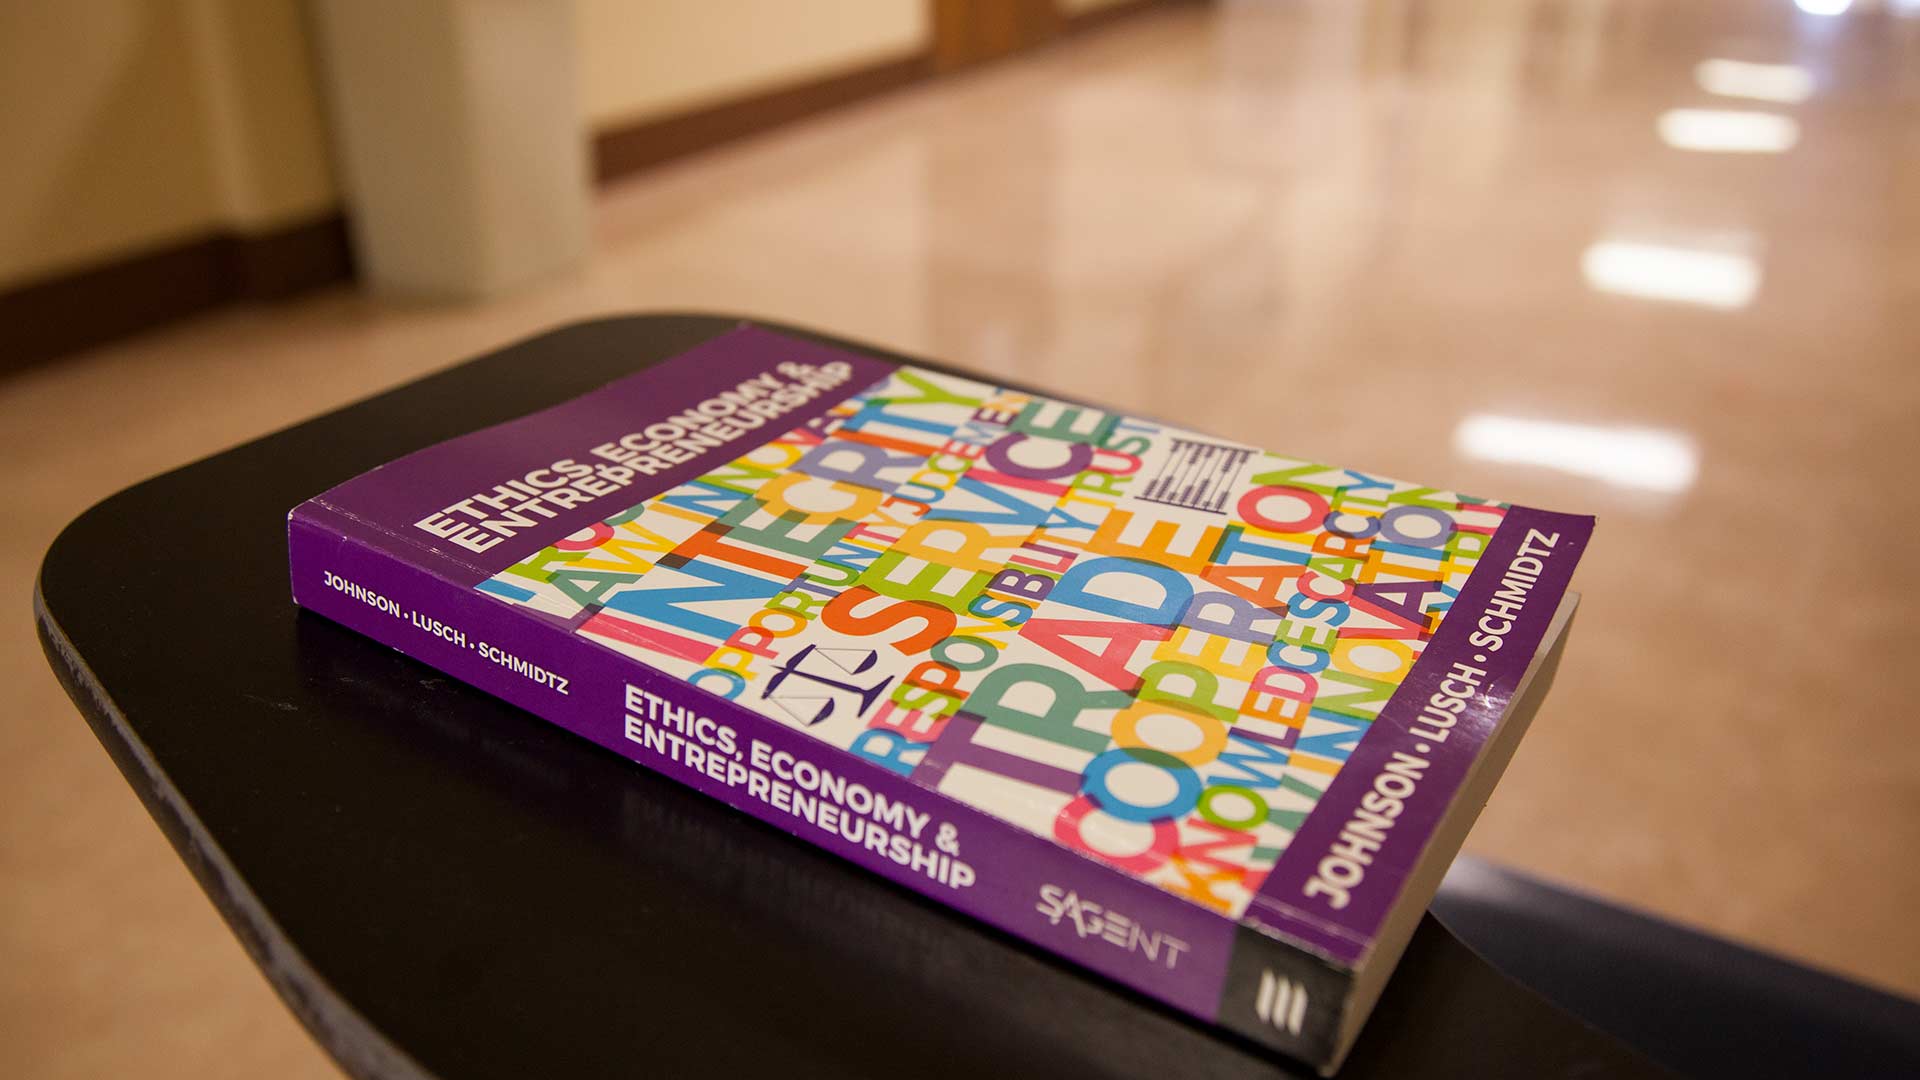 The textbook for Philosophy 101, "Ethics, Economy and Entrepreneurship."